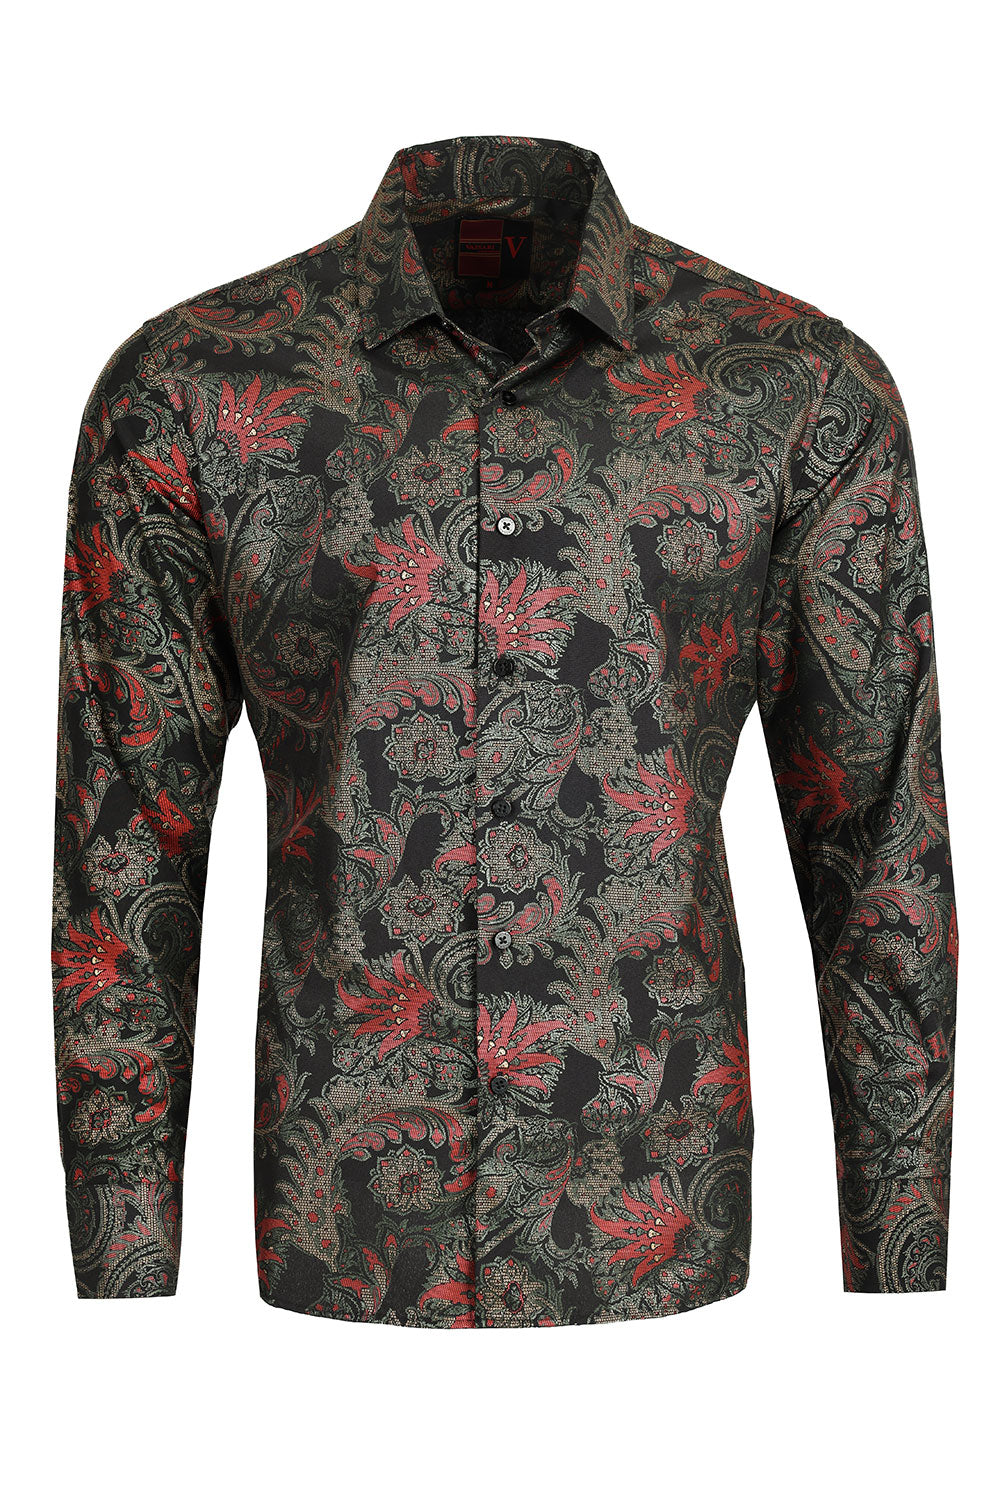 BARABAS Men's Floral Long Sleeve Button Down Shirt 2VS176 Black